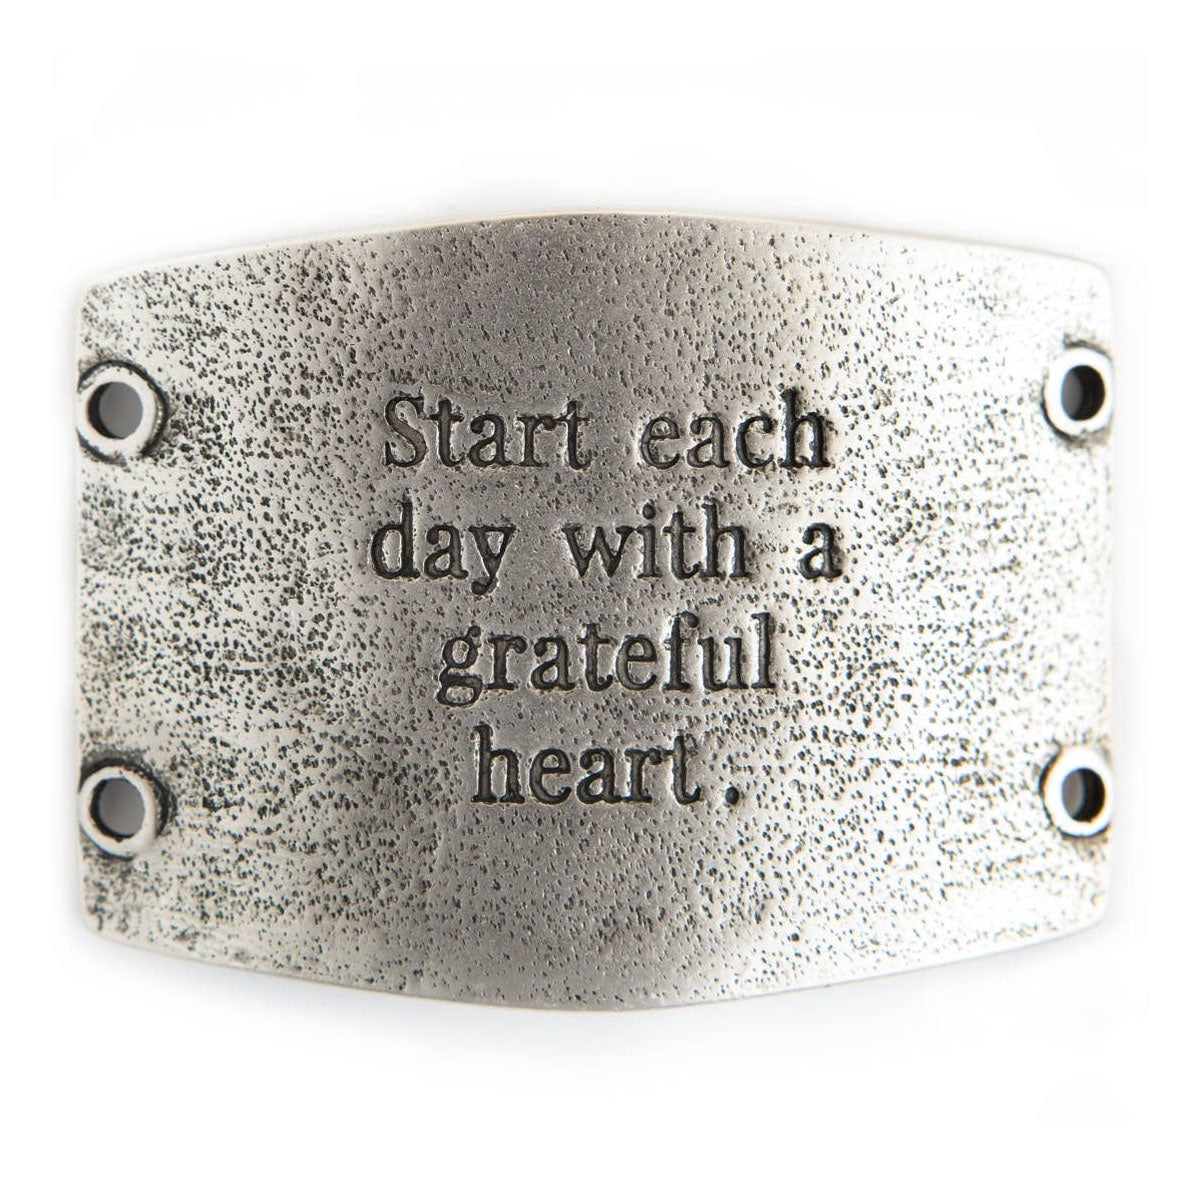 Vintage silver Lenny & Eva bracelet sentiment that says, "Start each day with a grateful heart."